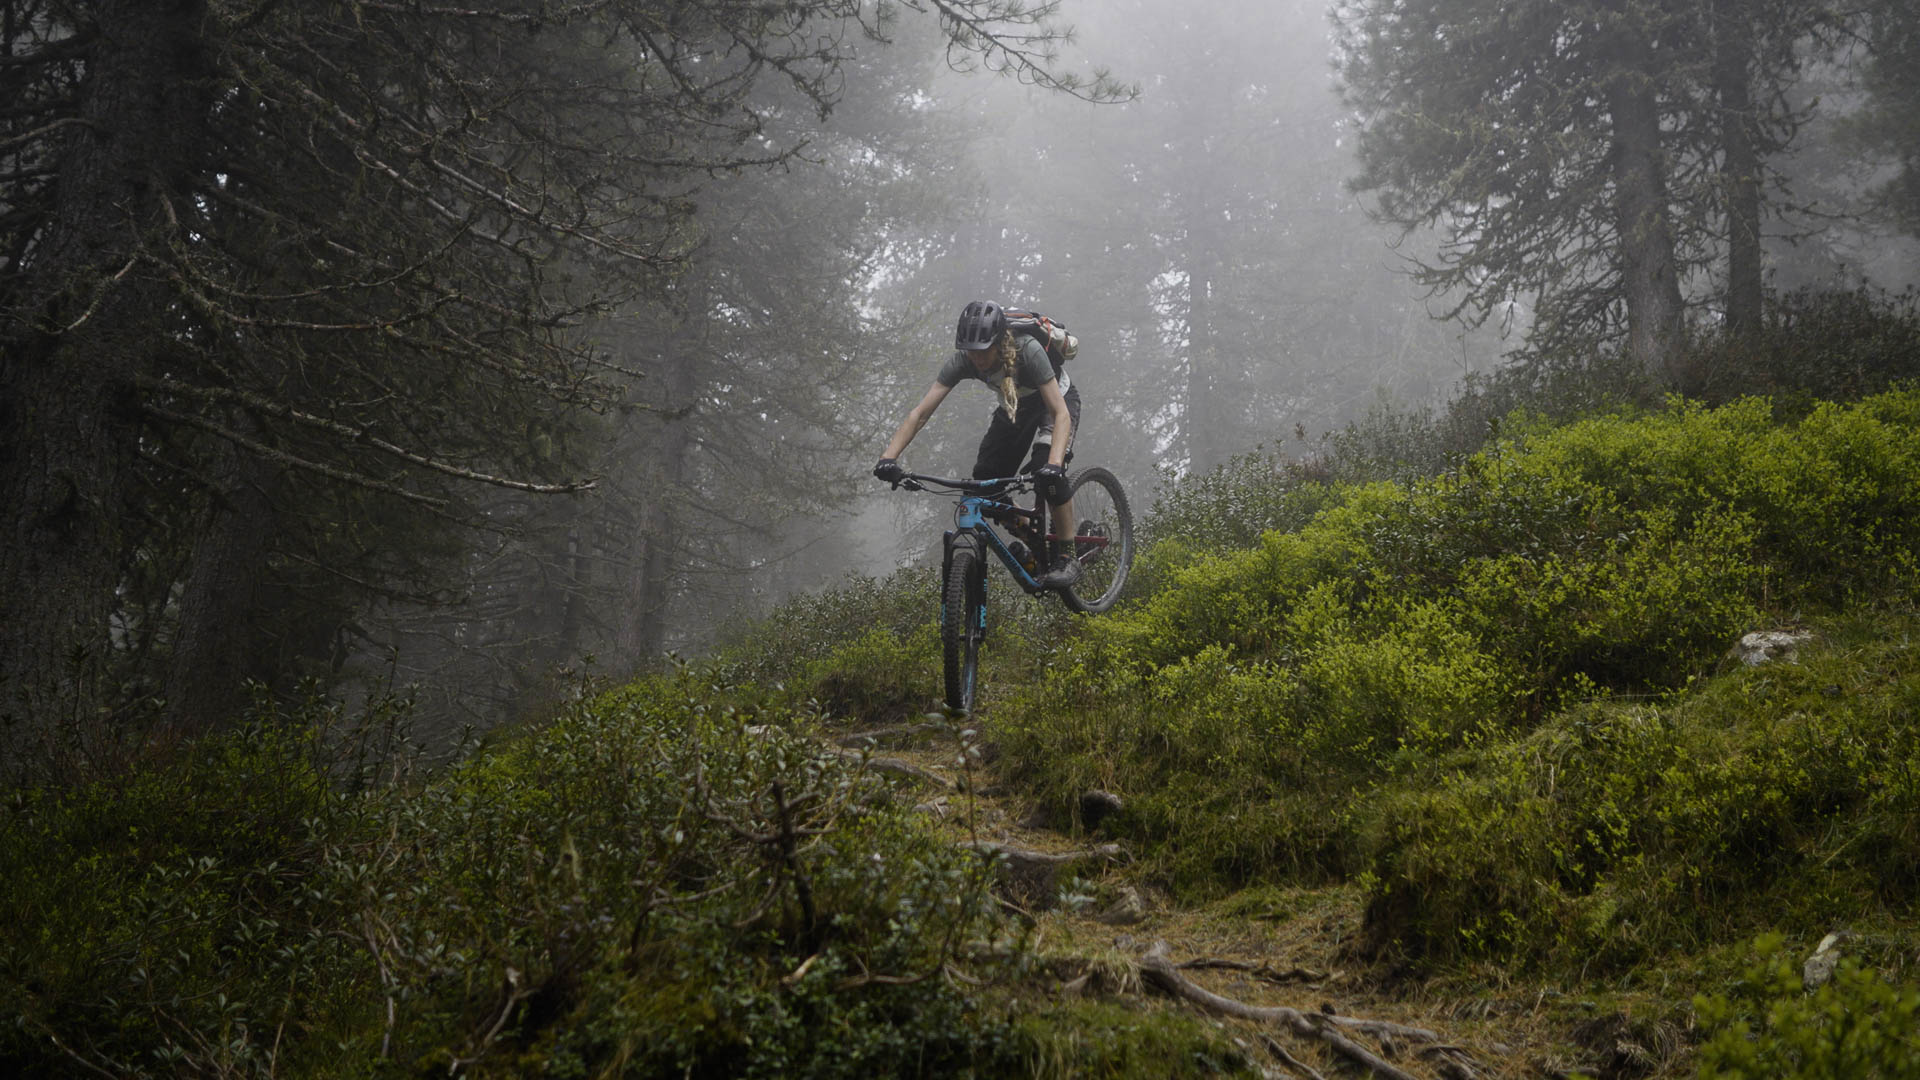 The mountain bike woman Maria riding her enduro bike on a scenic, technical trail.